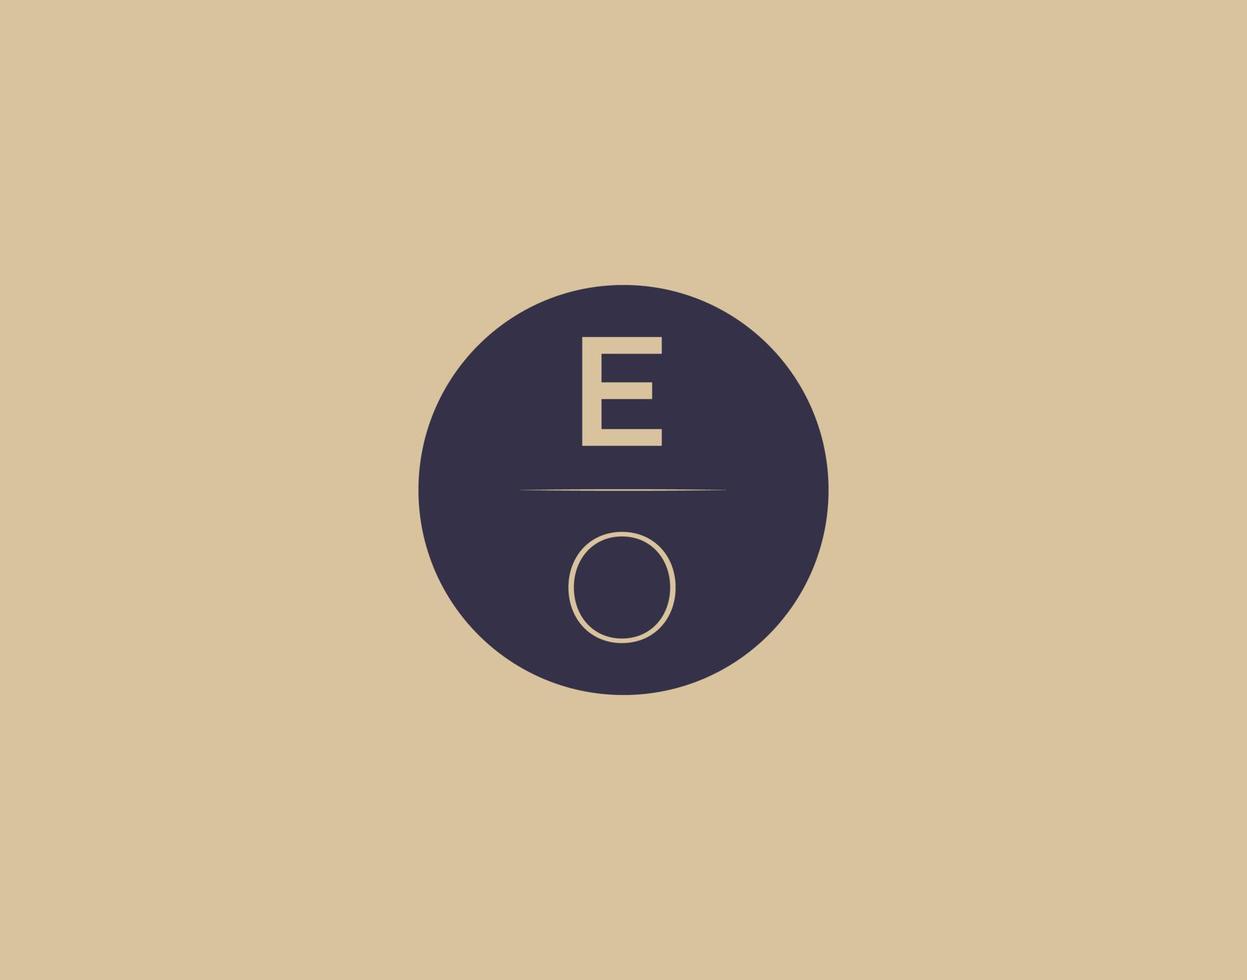 EO letter modern elegant logo design vector images